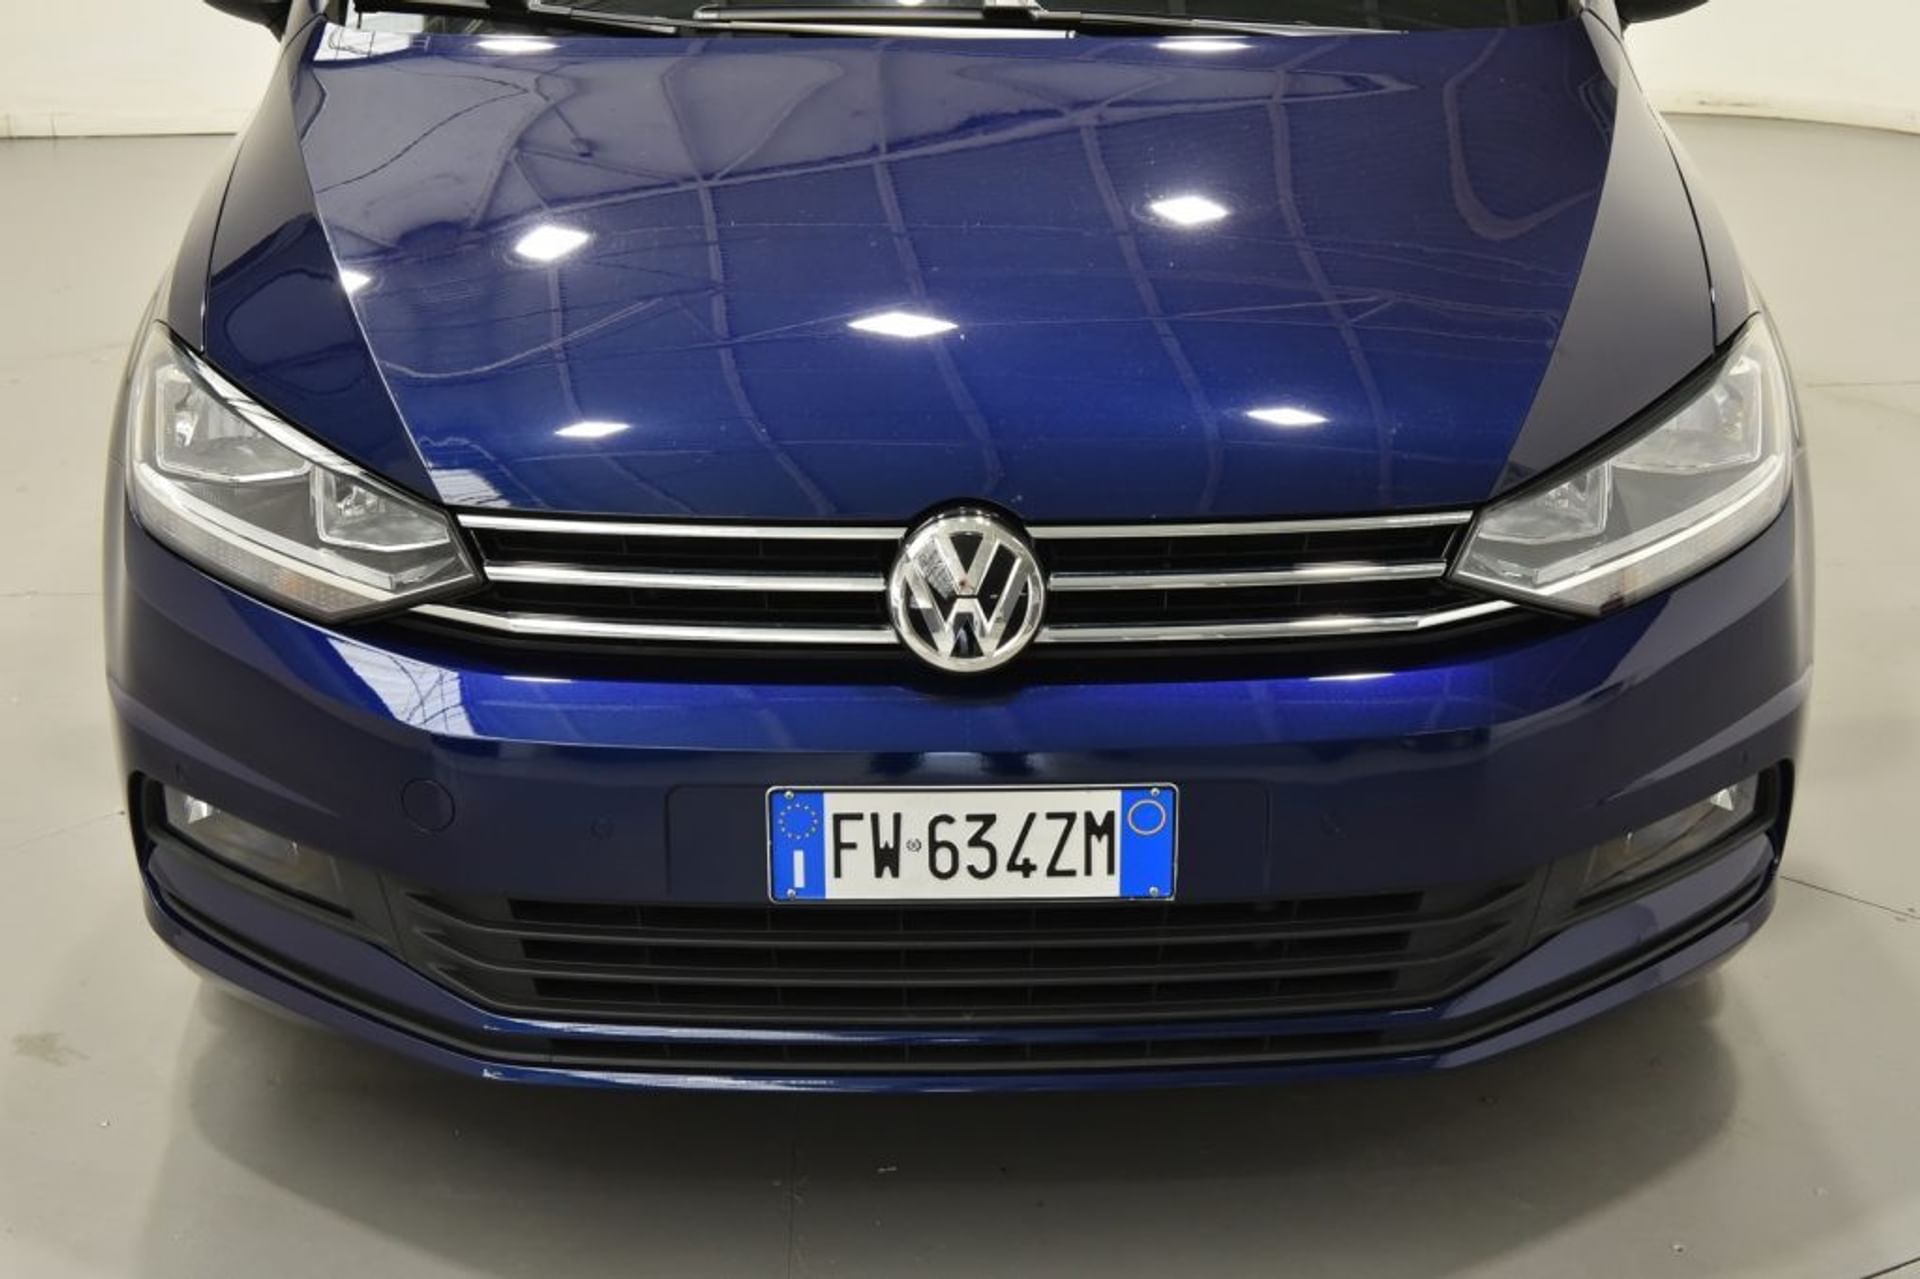 Volkswagen 1.6 TDI 115 CV - Anteriore